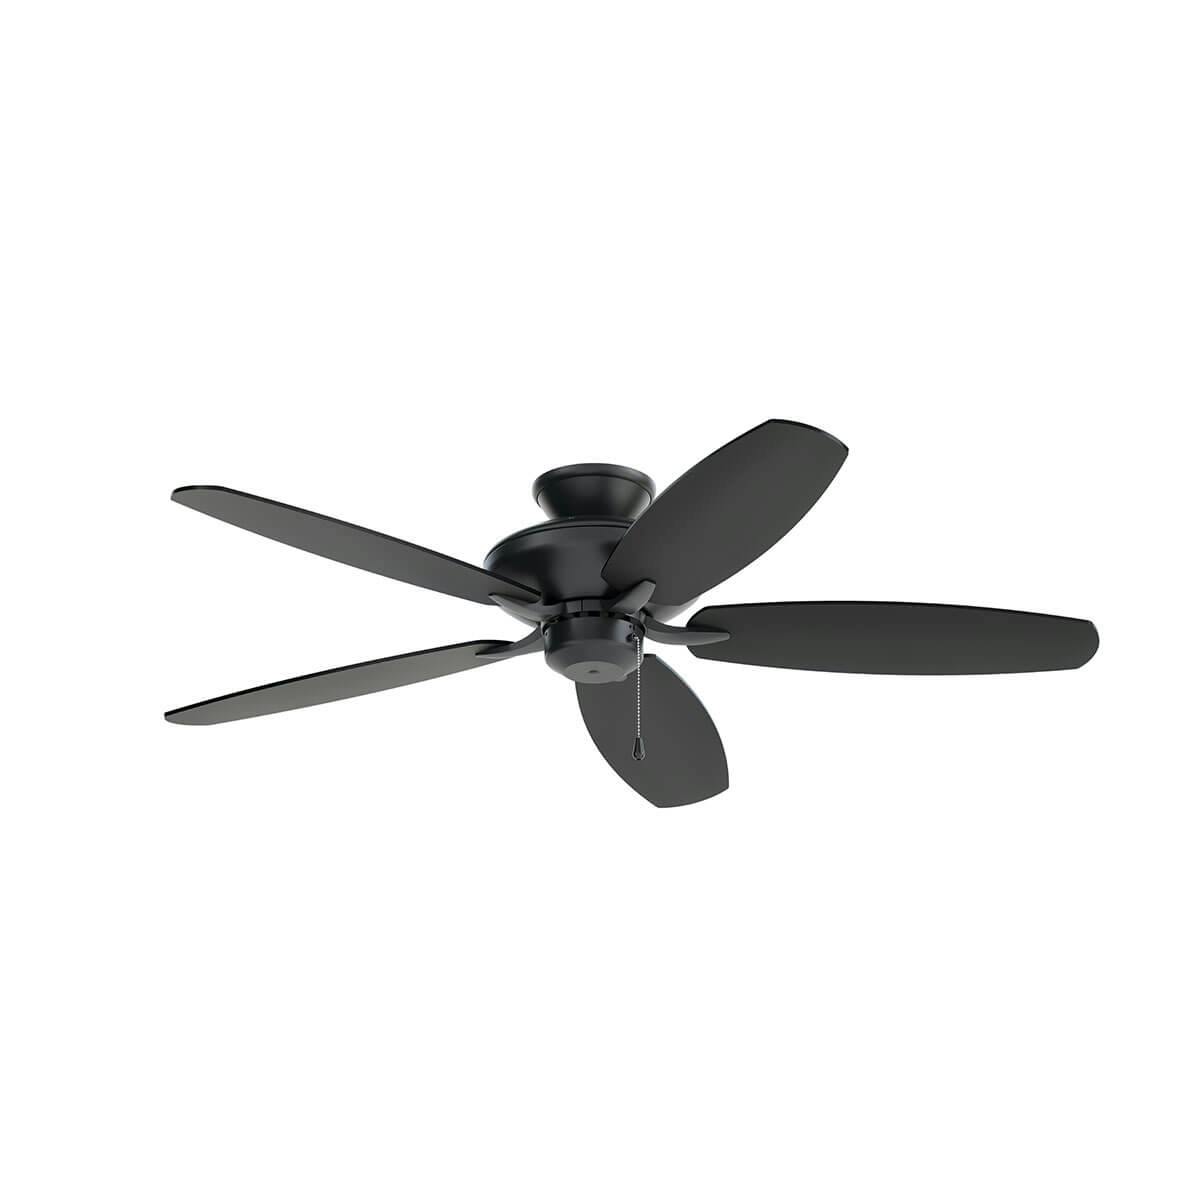 Product Image of ceiling fan 330165SBK